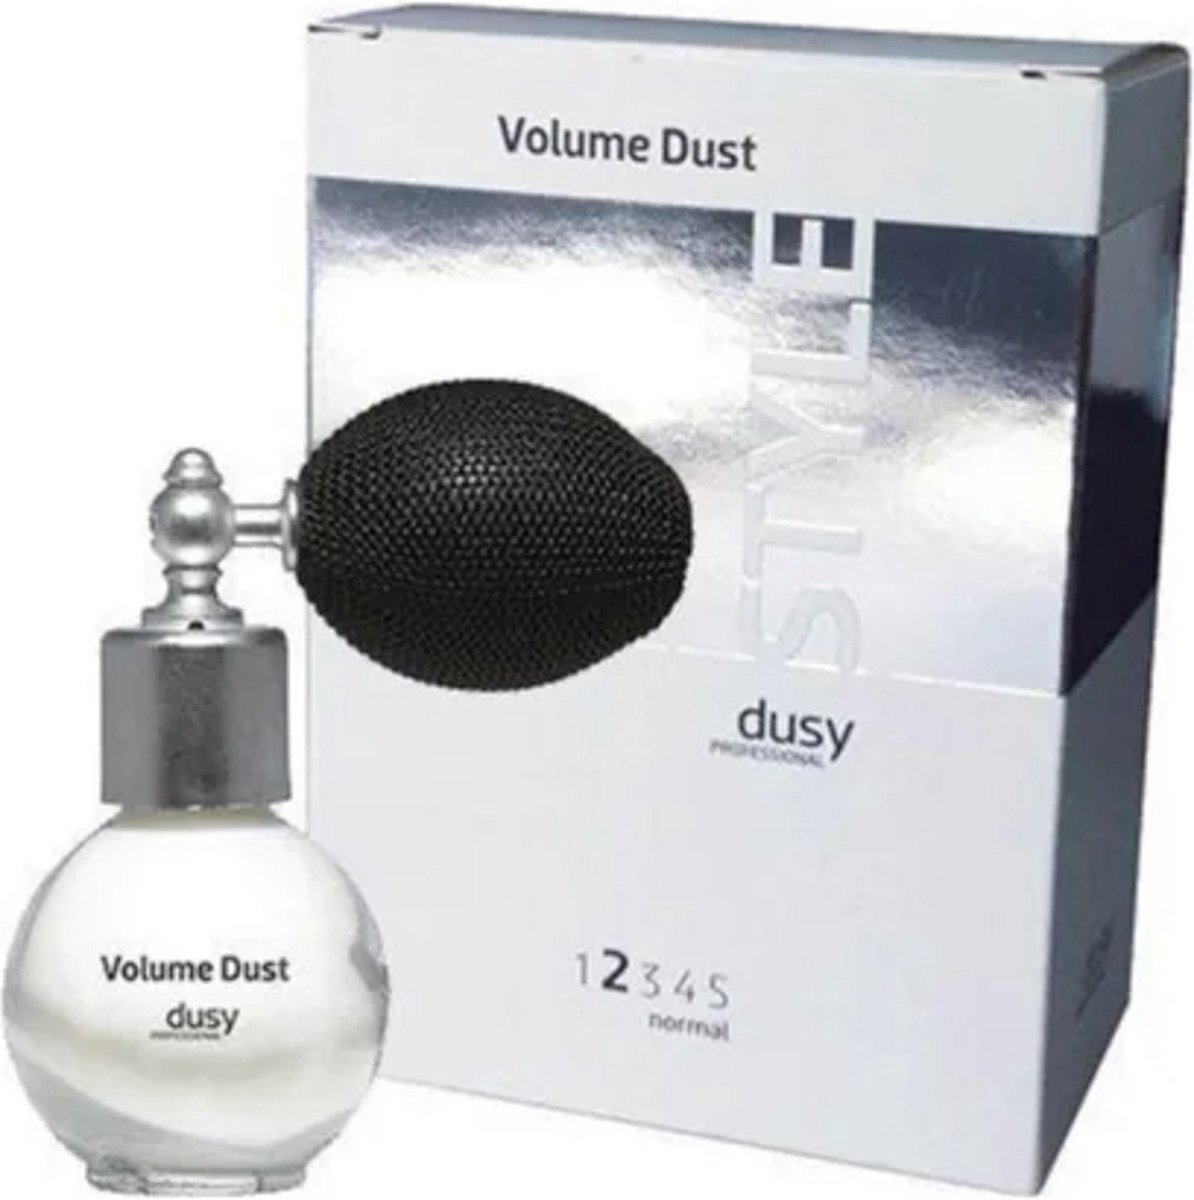 Volume Dust - Dusy